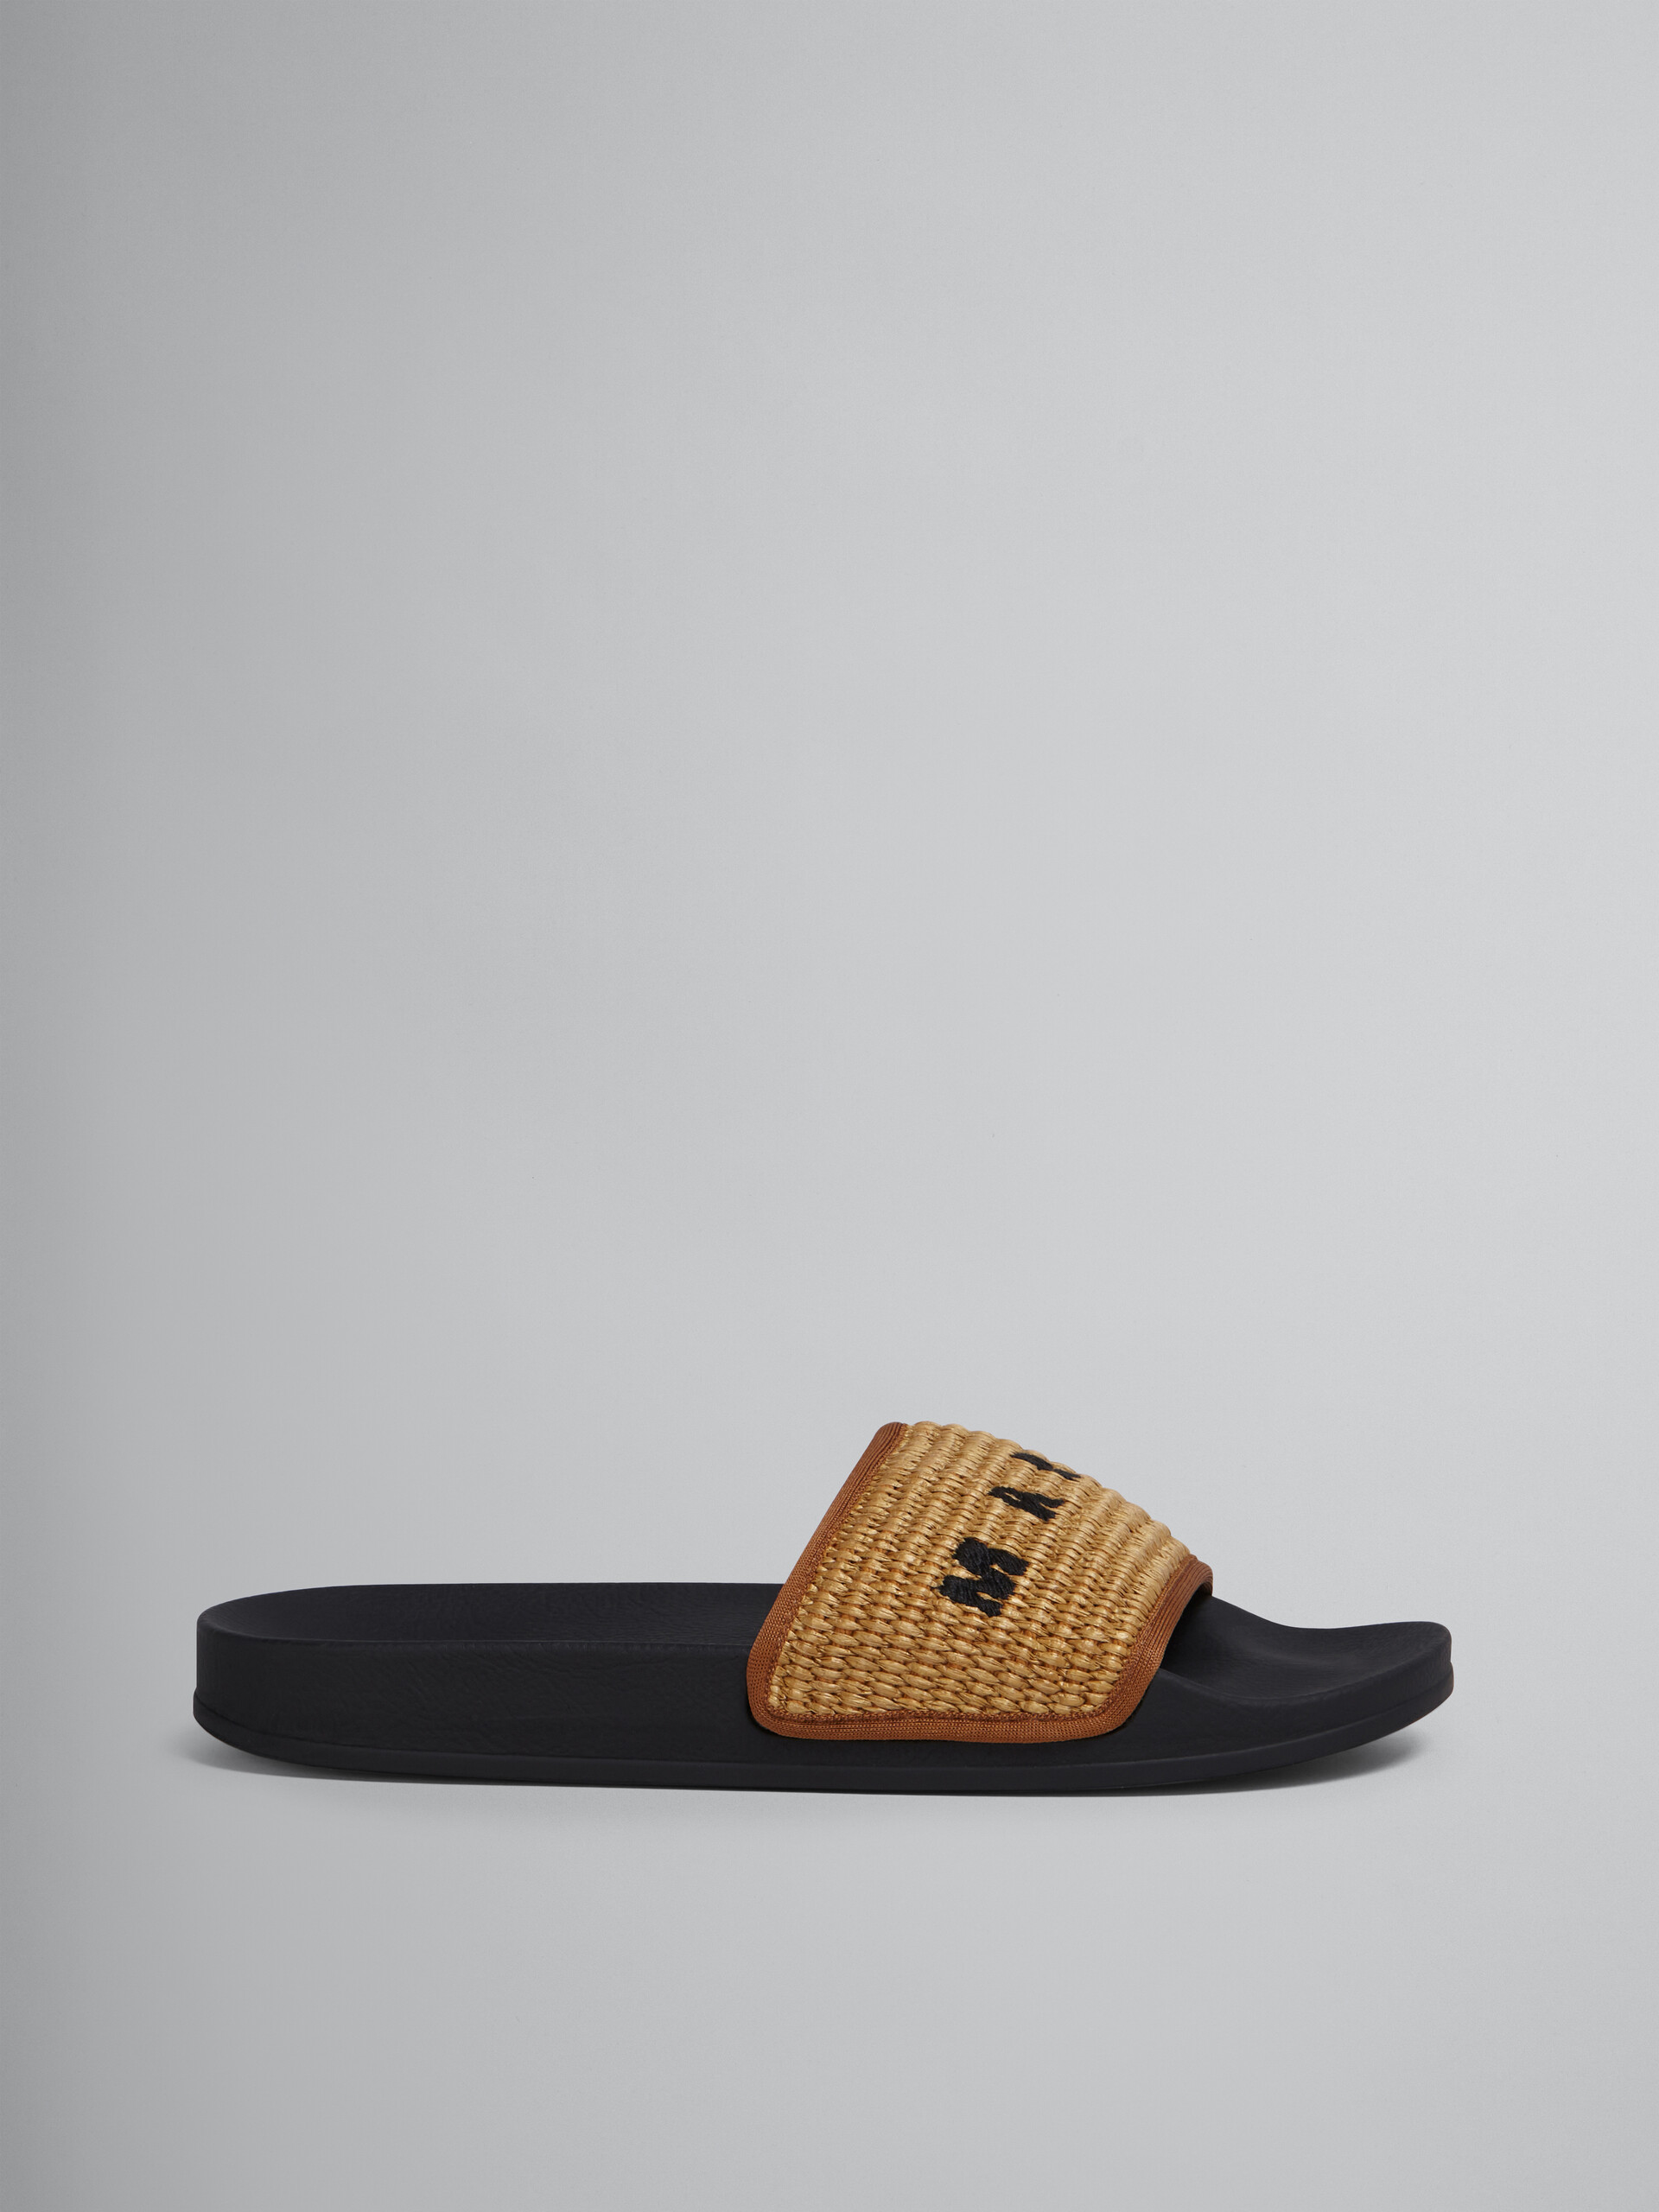 Brown raffia sandal - Sandals - Image 1